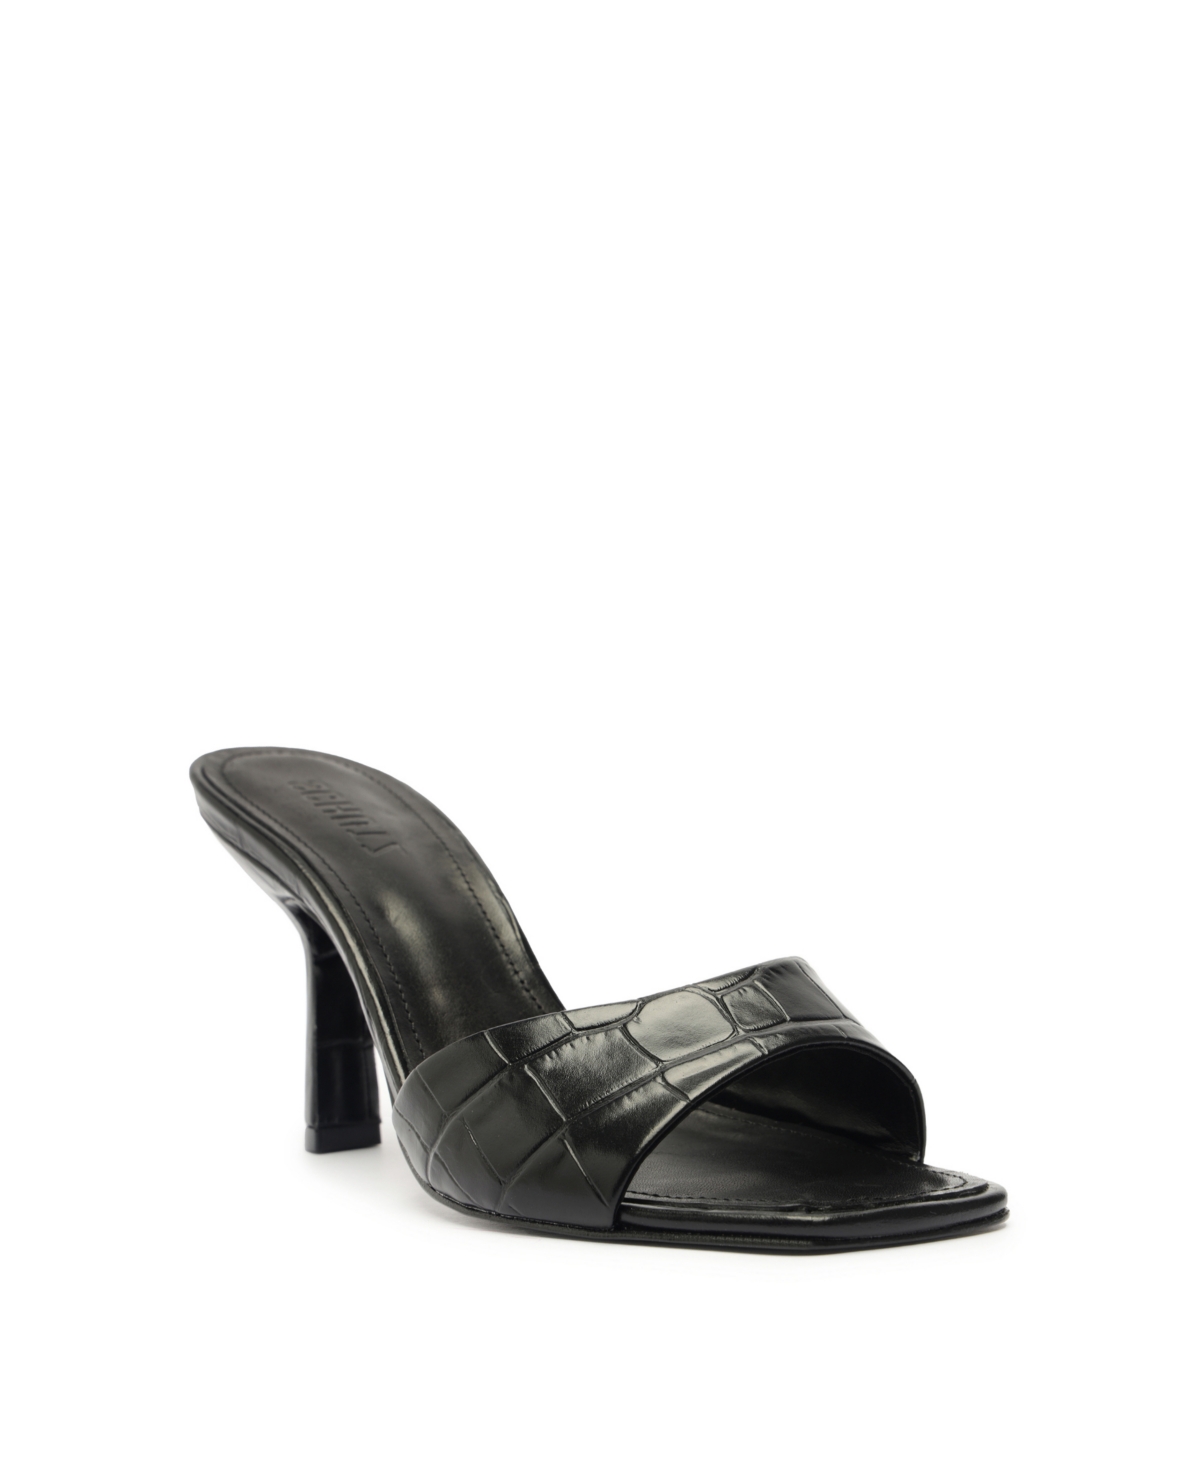 Women's Posseni Casual High Stiletto Sandals - Black